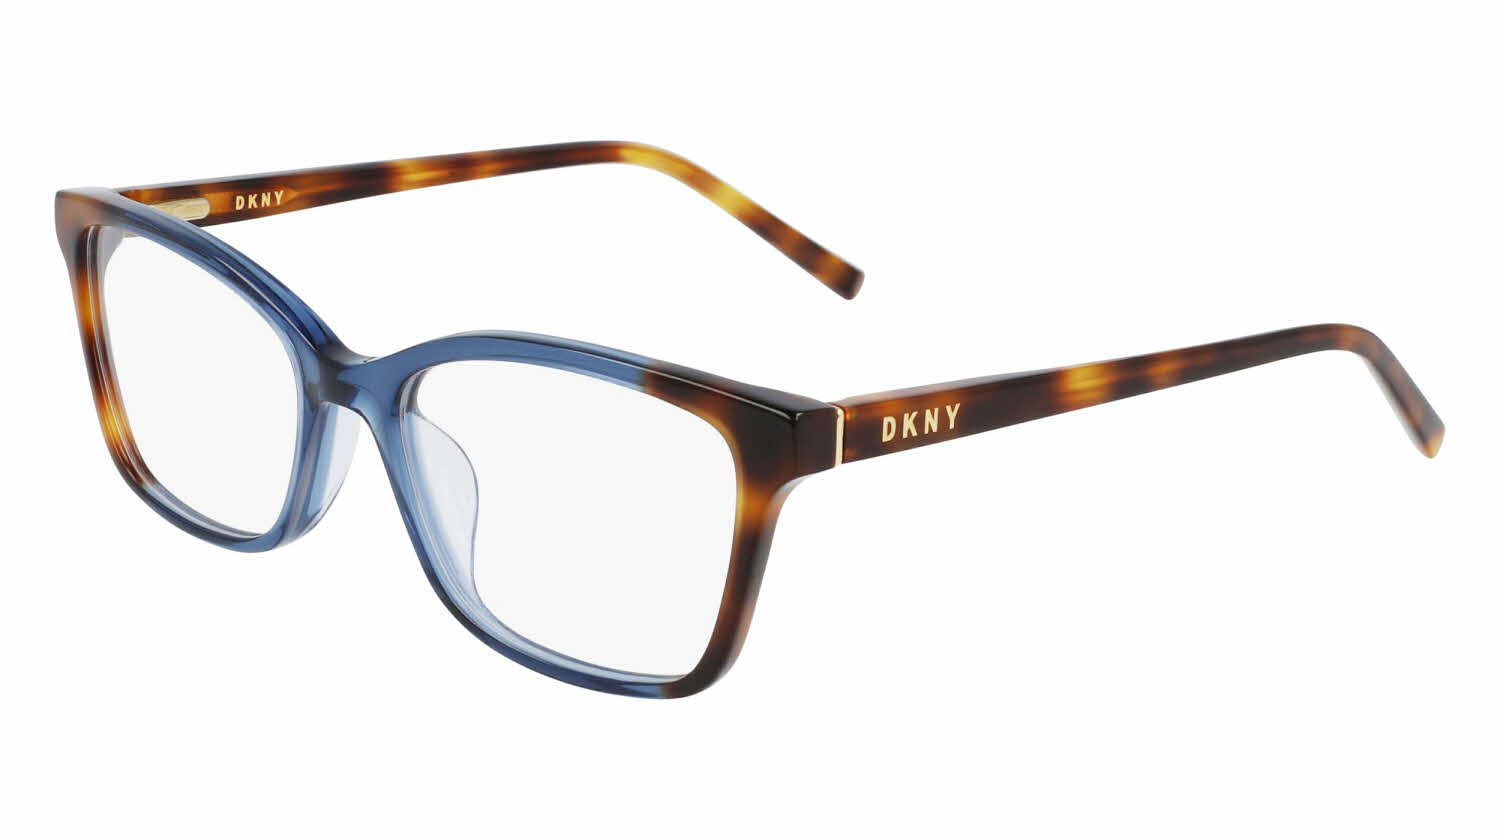 DKNY DK5034 Women's Eyeglasses In Tortoise